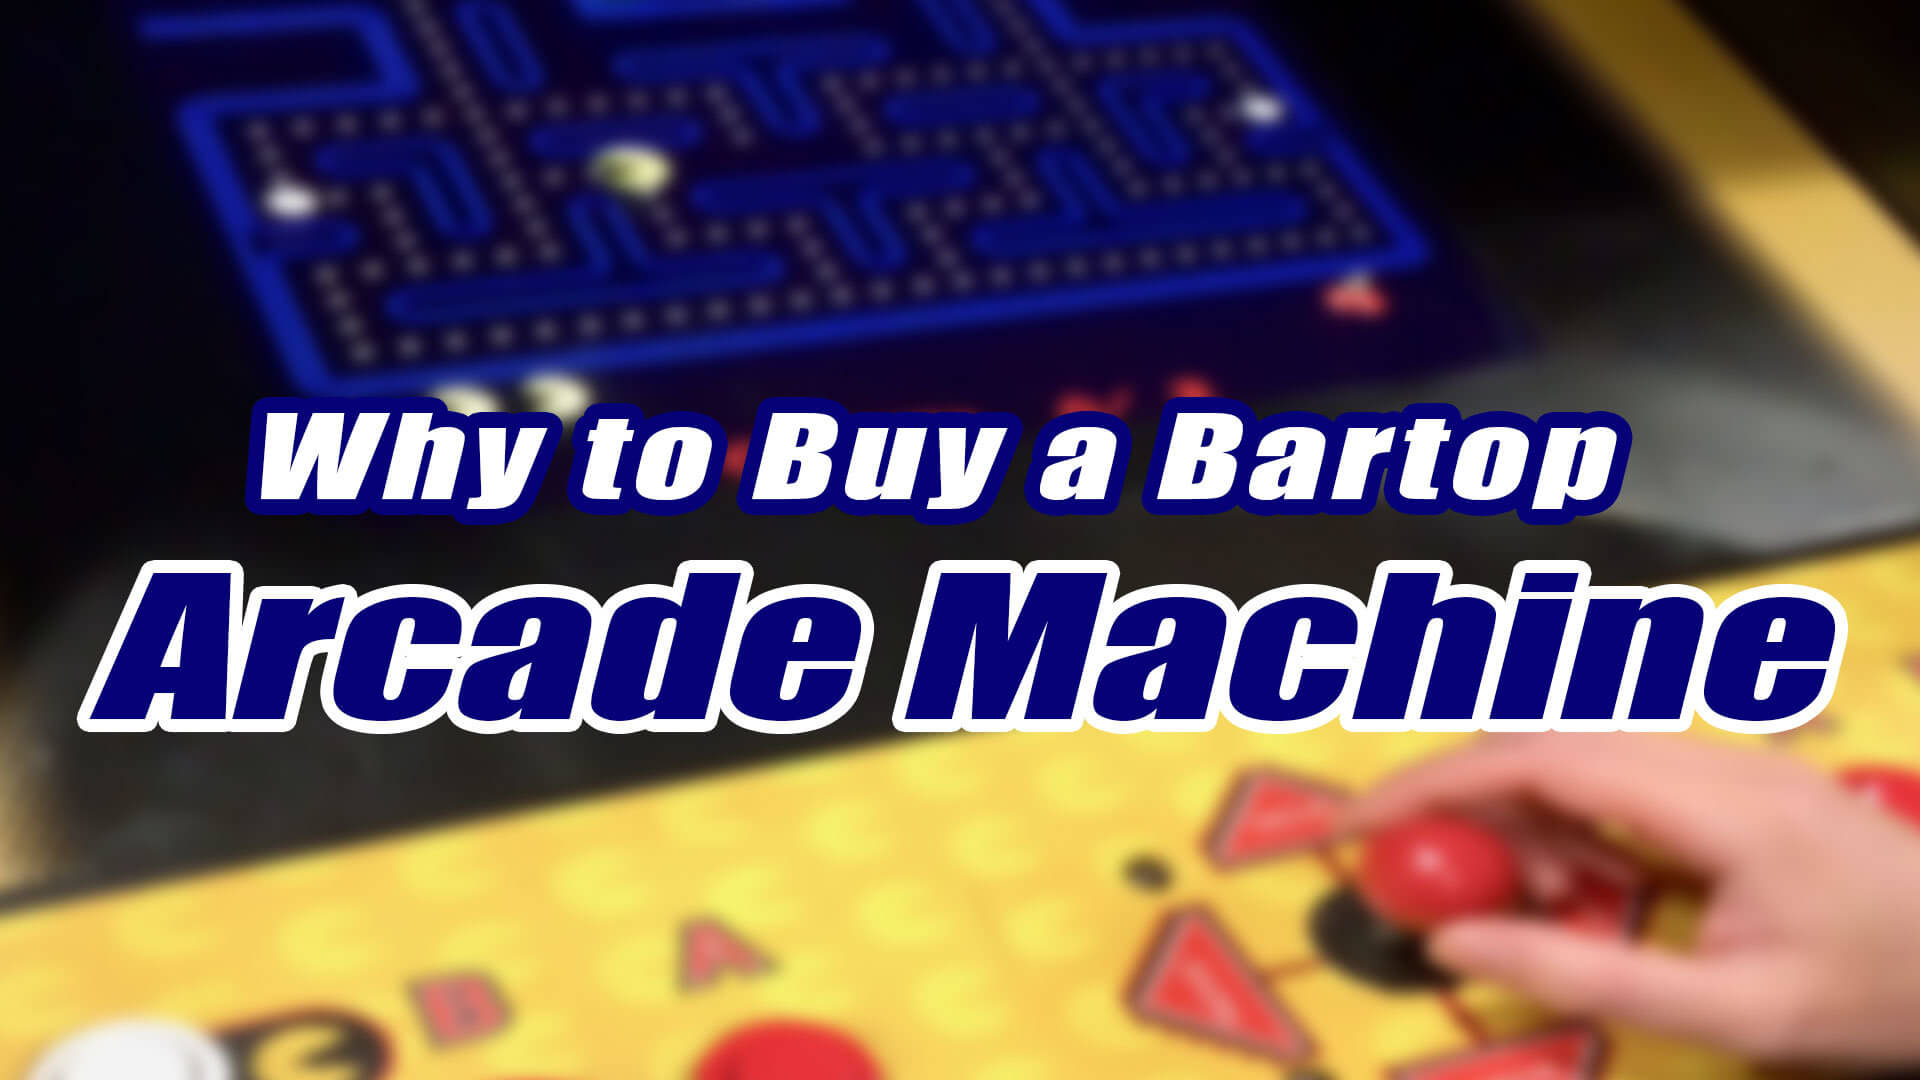 BLOG-5-Reasons-to-Buy-a-Bartop-Arcade-MAchine